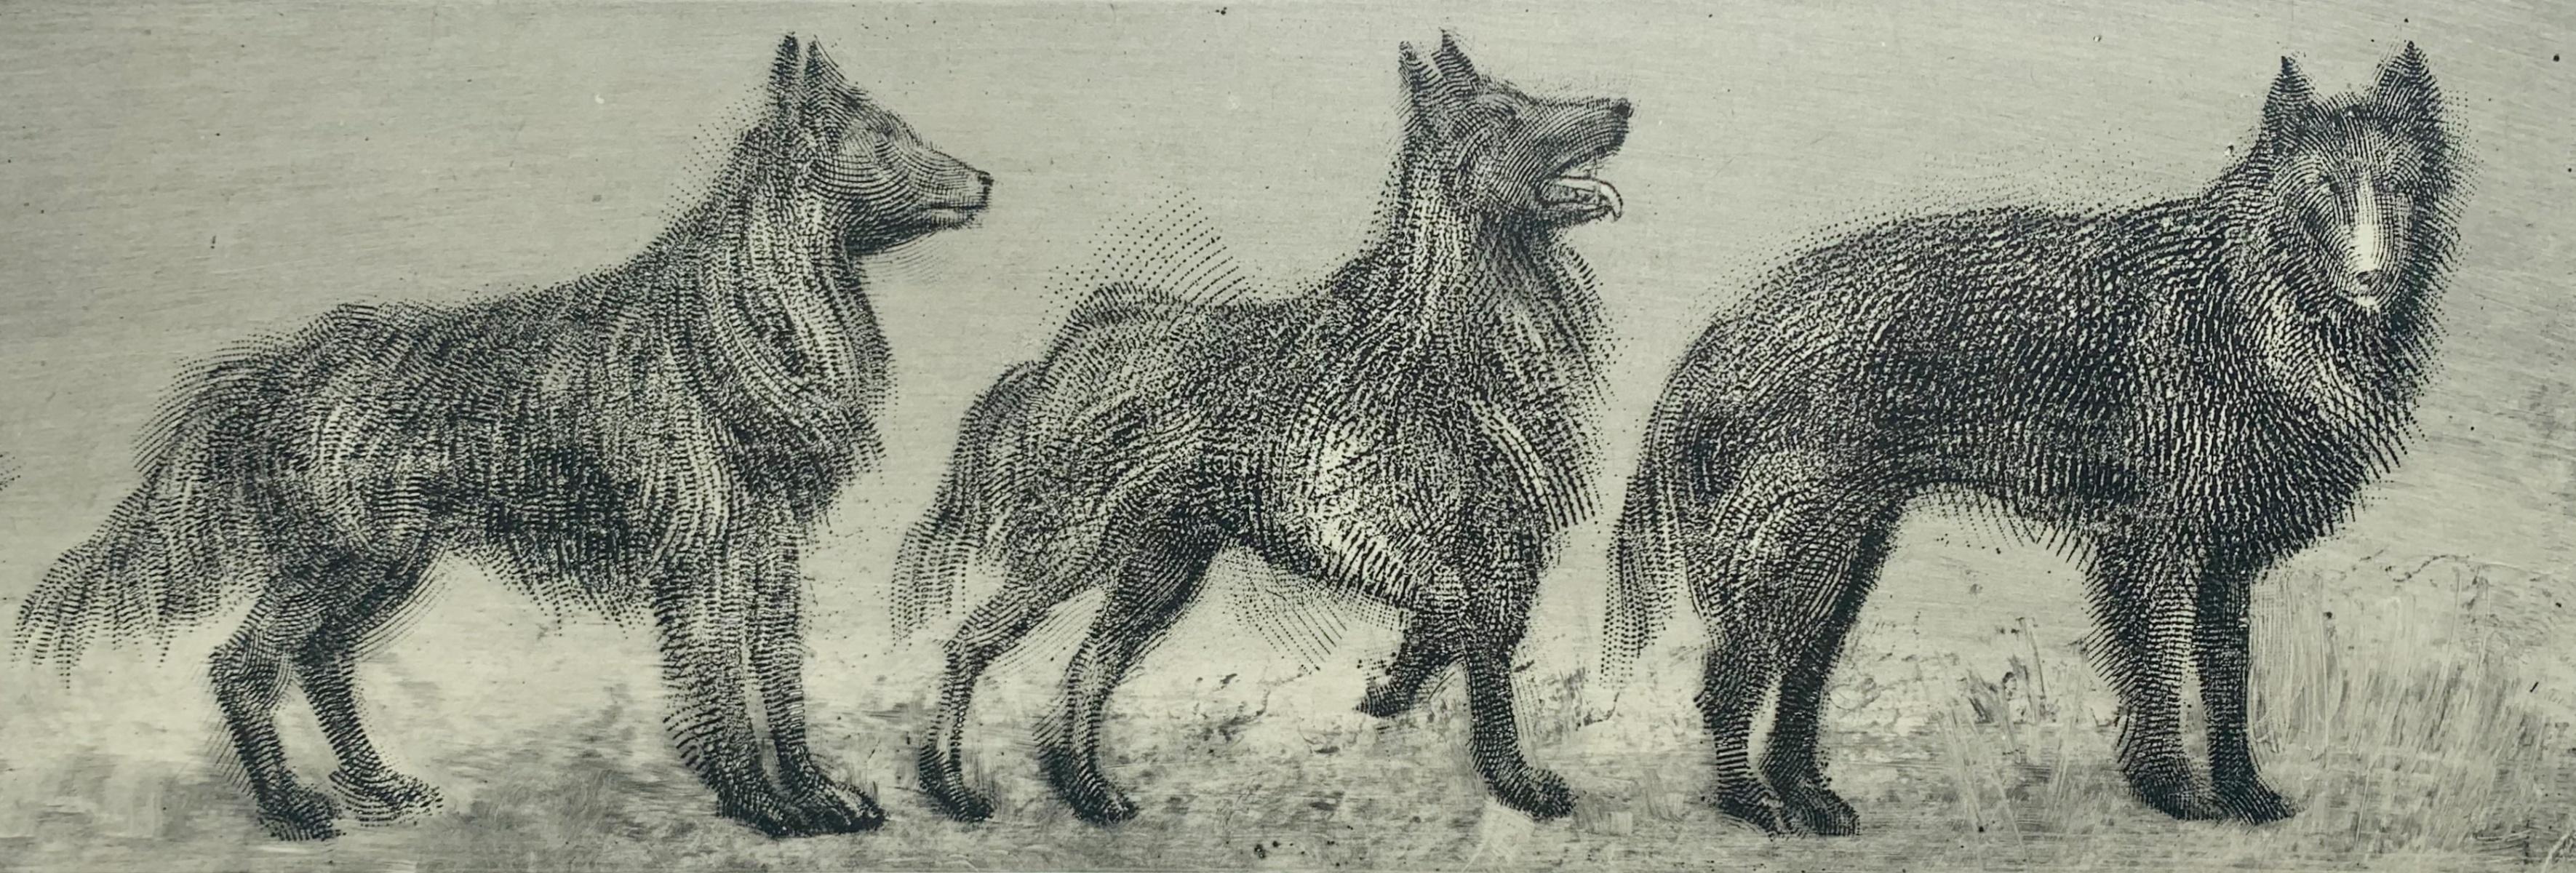 Pawel Zablocki Animal Print - Belgian sheep dogs II and III. Contemporary Figurative Etching Print, Animals